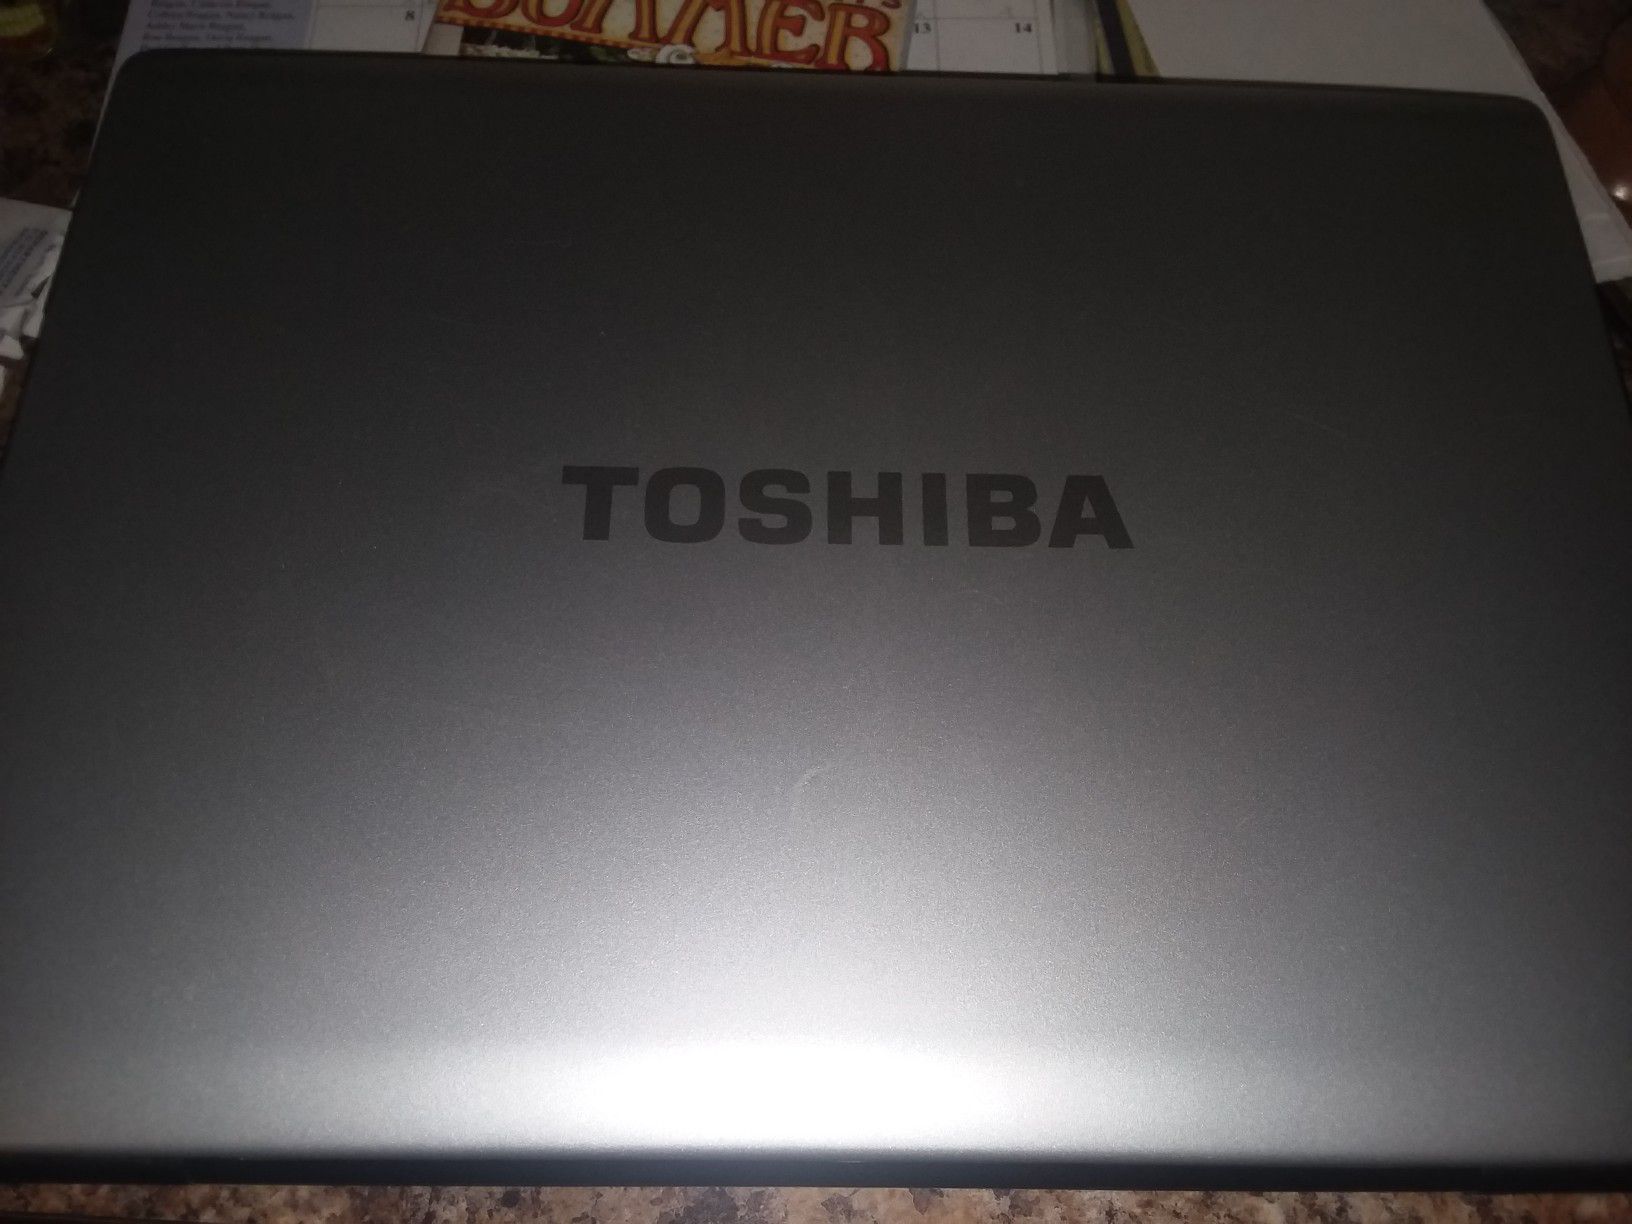 Toshiba laptop with Windows Vista